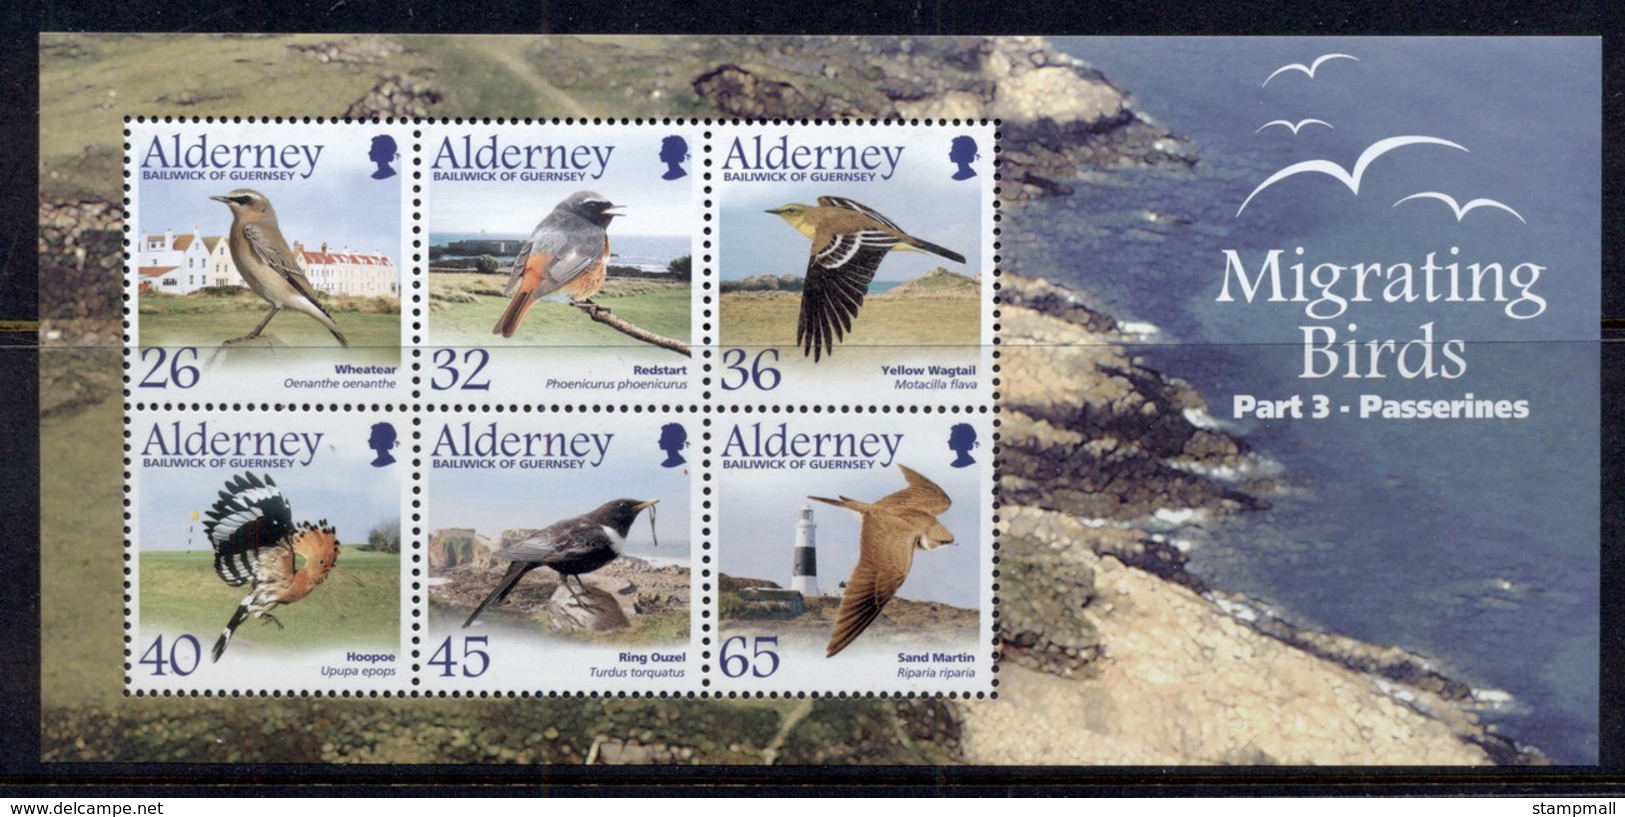 Alderney 2004 Migratory Birds MS MUH - Alderney